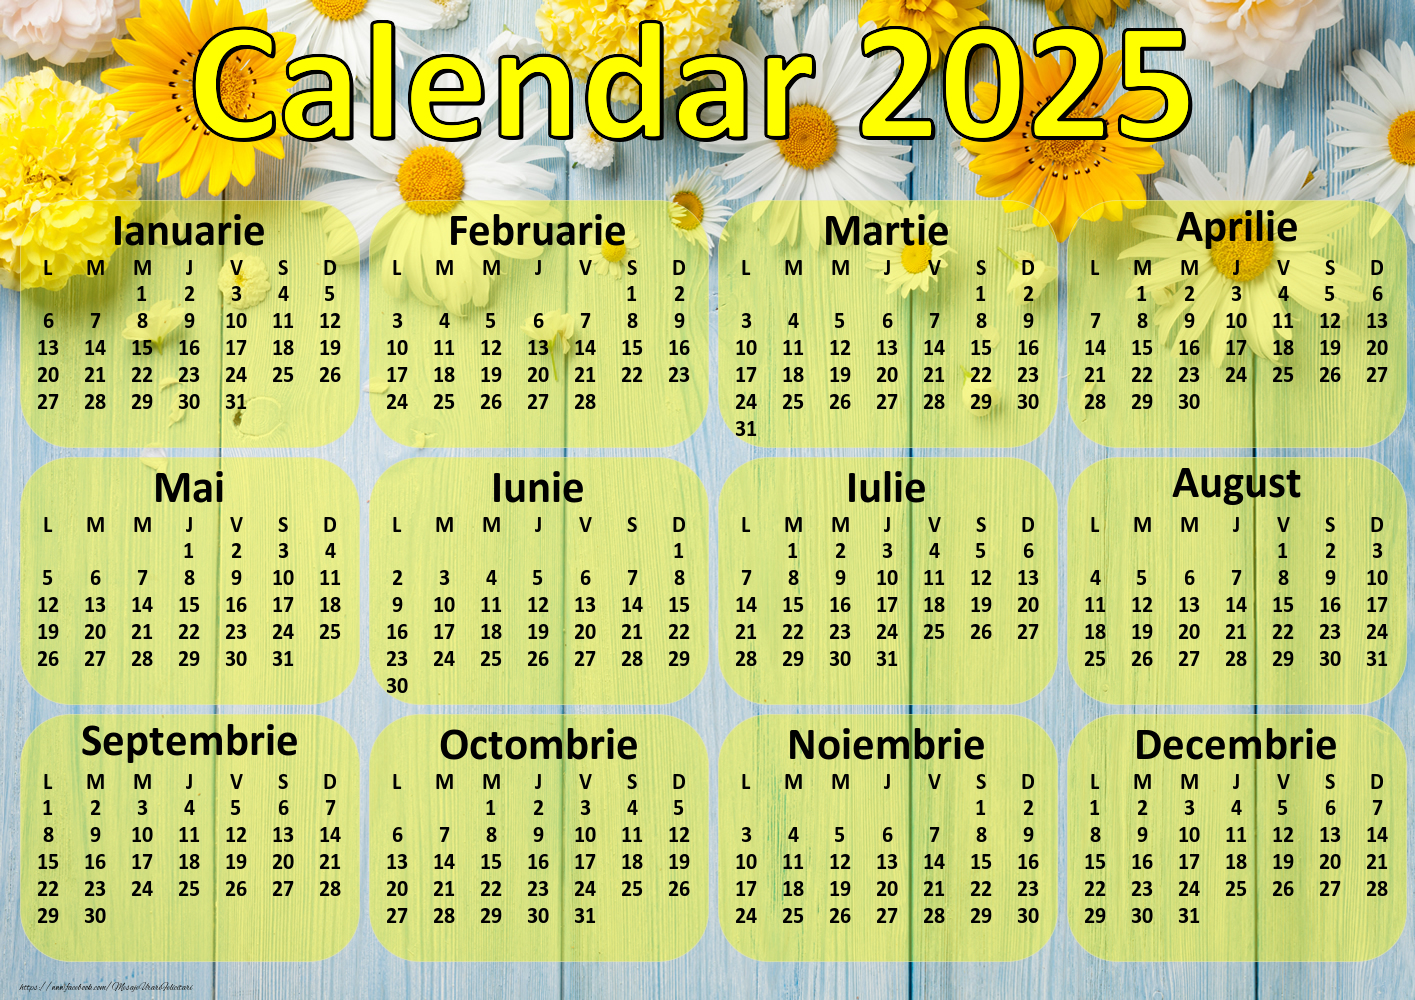 Imagini cu calendare - Calendar 2025 - Flori - Model 0037 - mesajeurarifelicitari.com